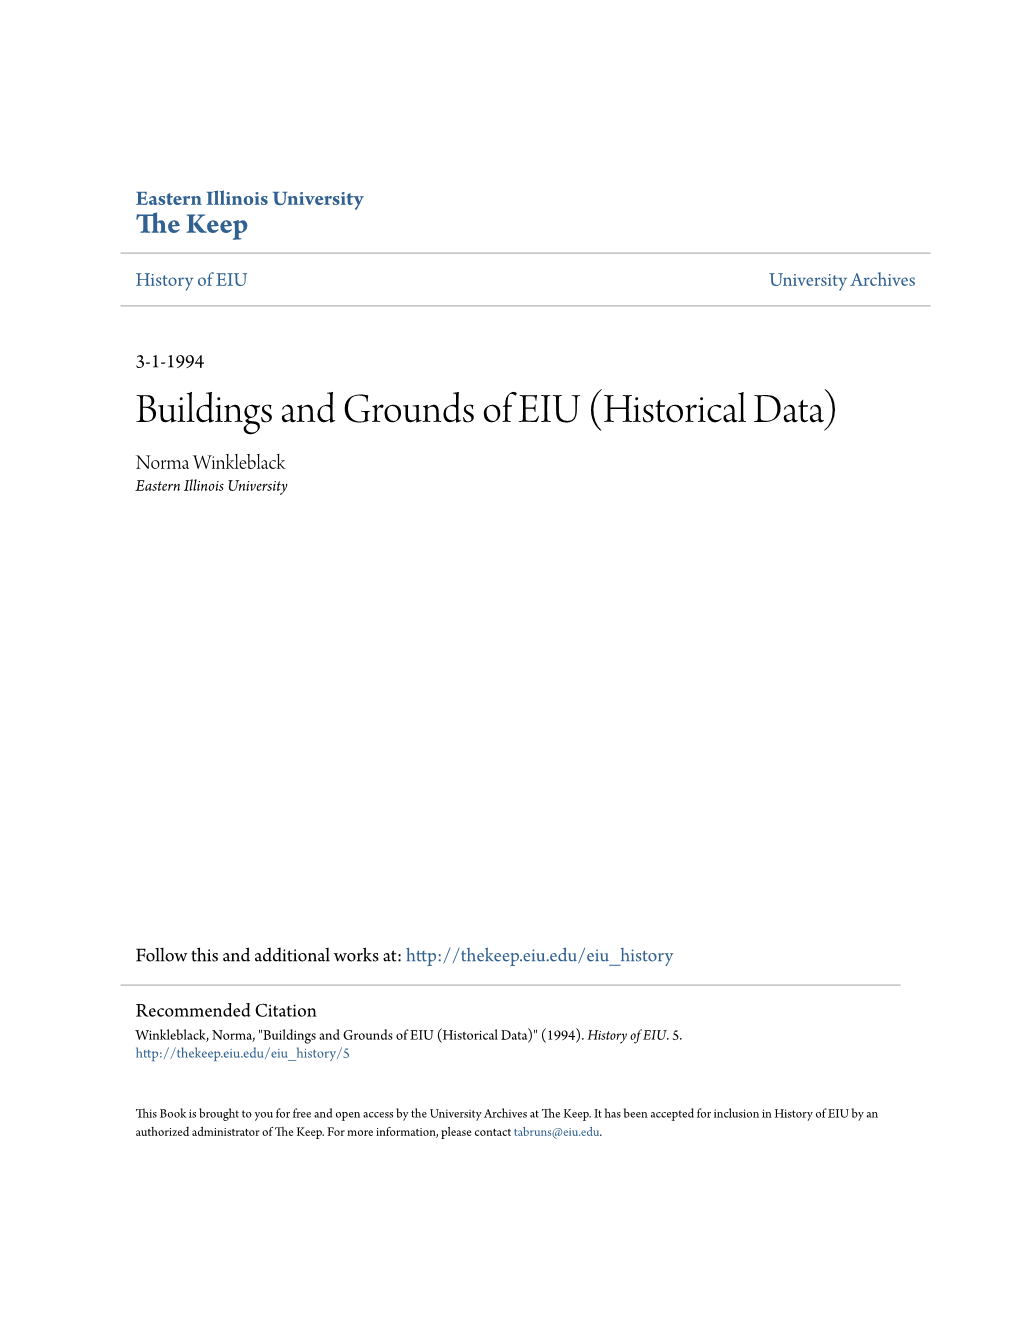 Buildings and Grounds of EIU (Historical Data) Norma Winkleblack Eastern Illinois University